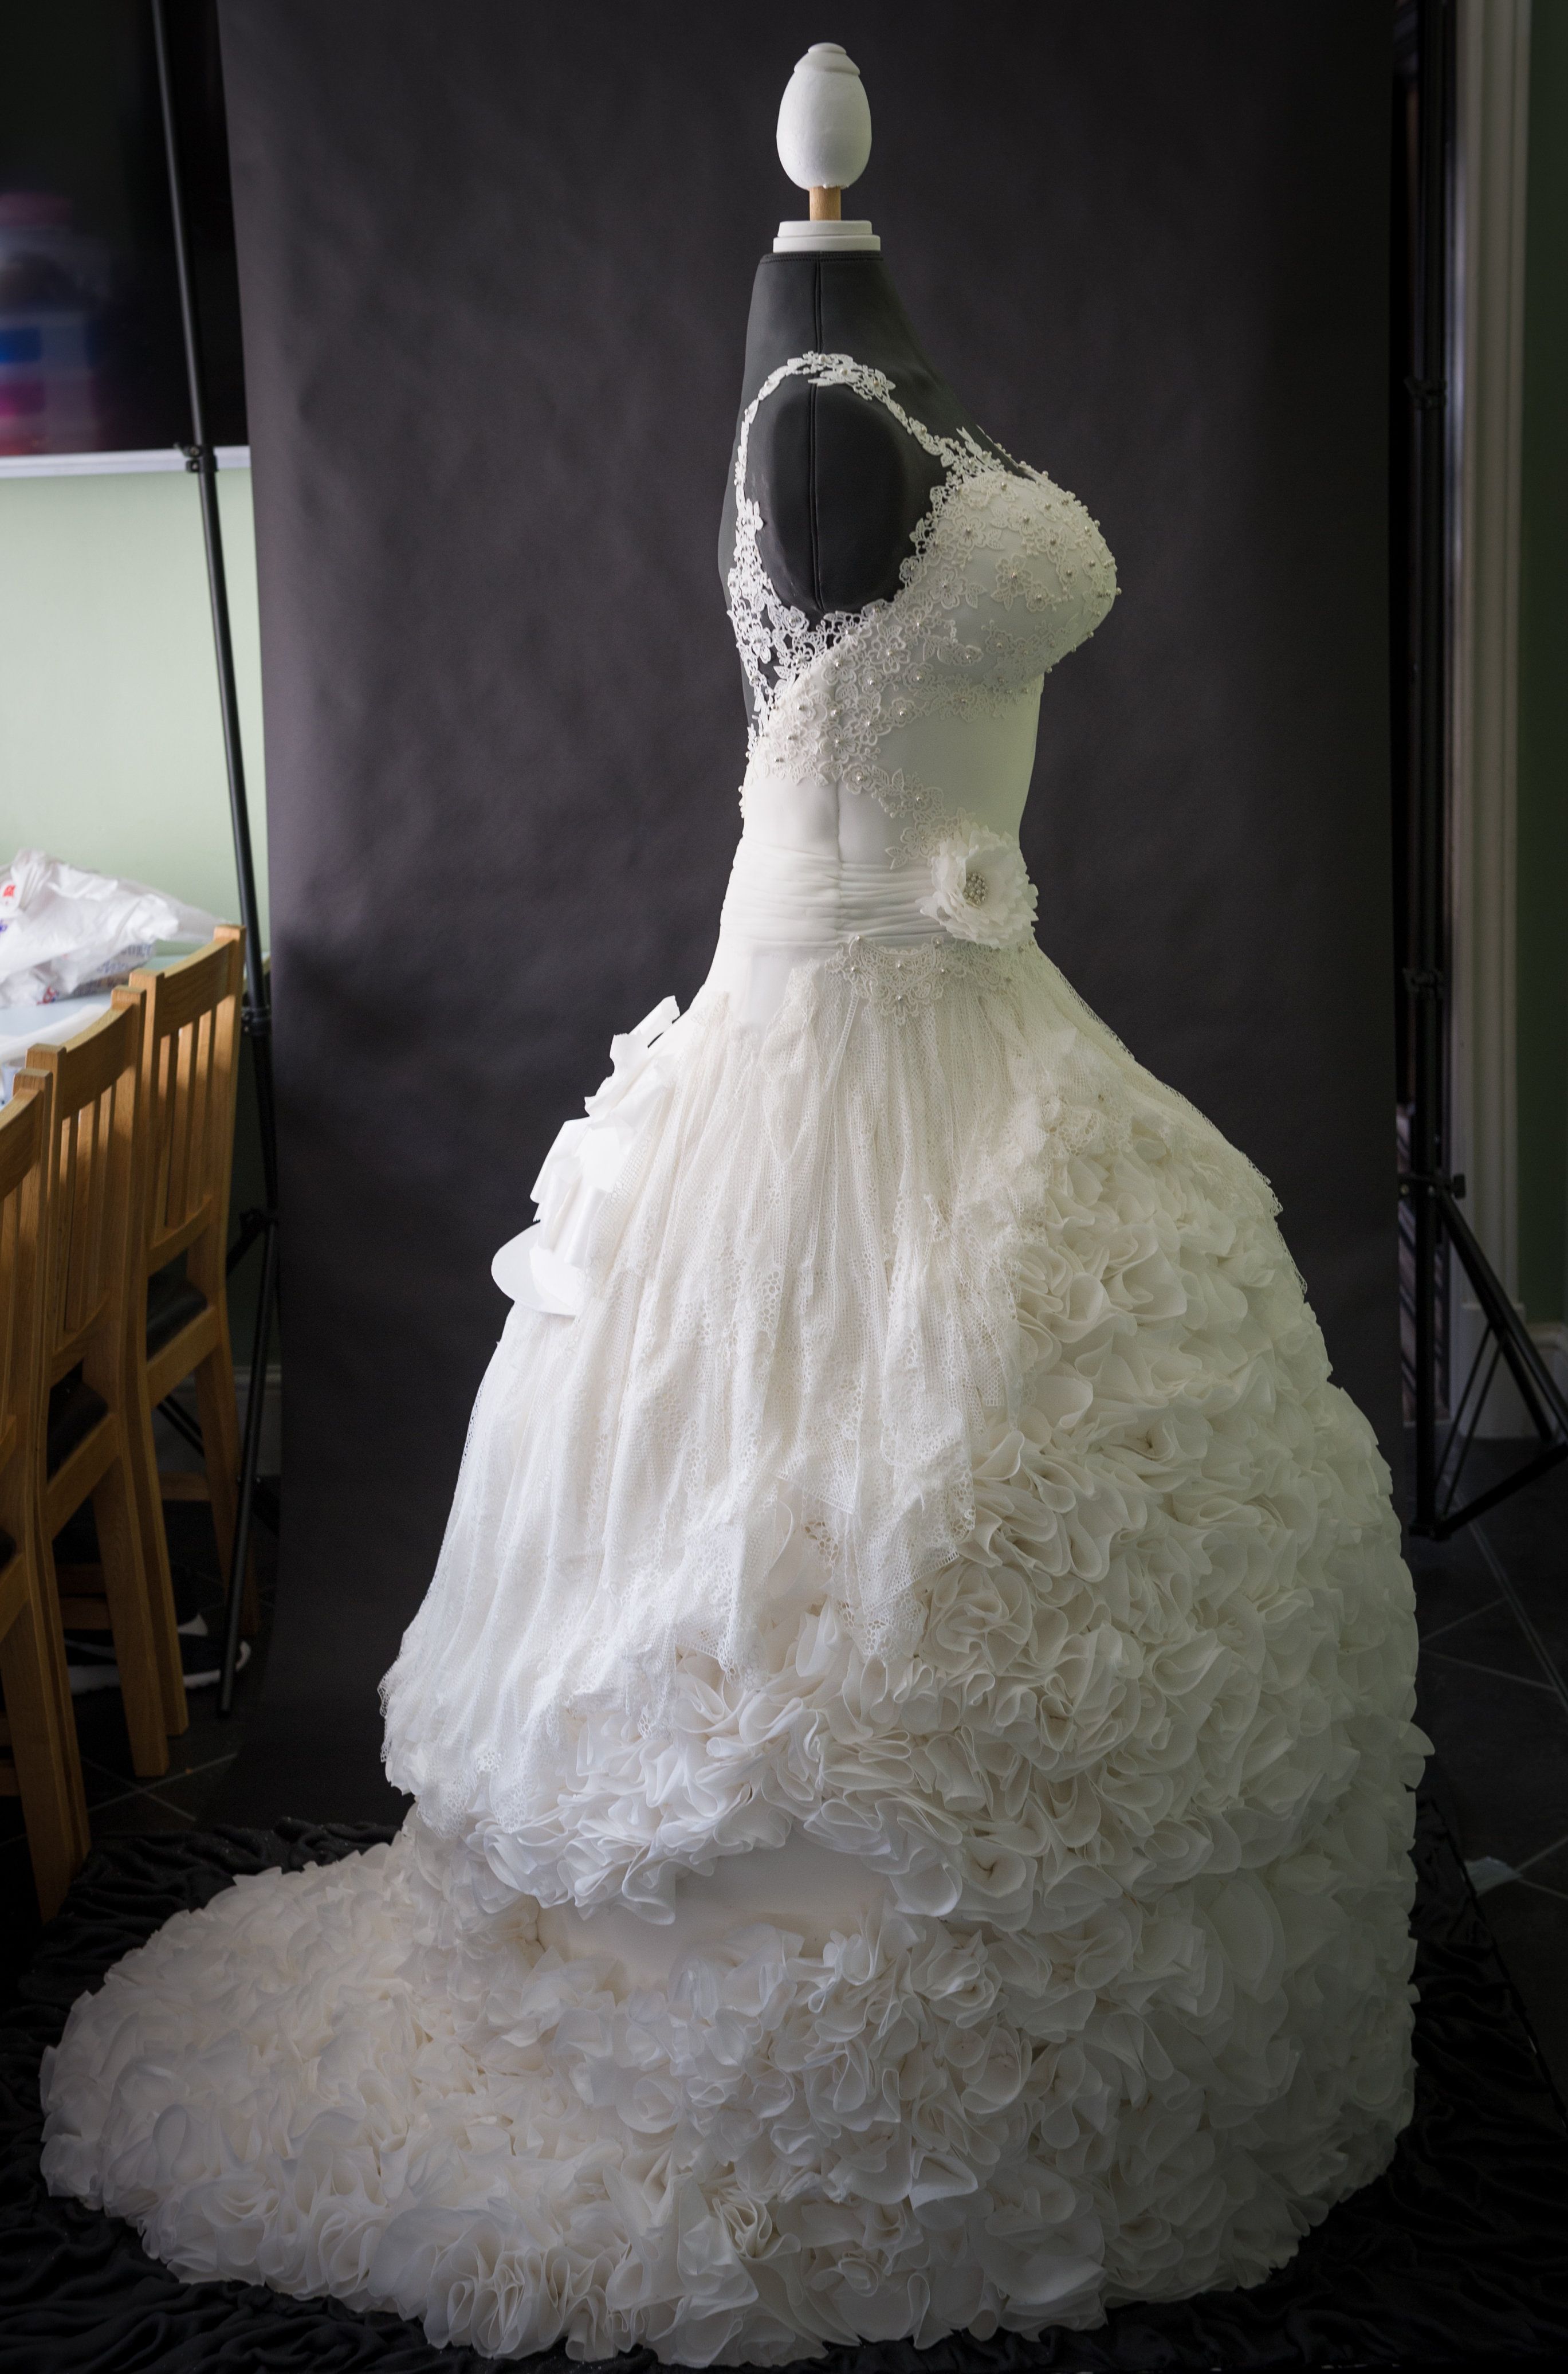 Lace Veil & Mantilla Wedding Cakes - Cake Geek Magazine